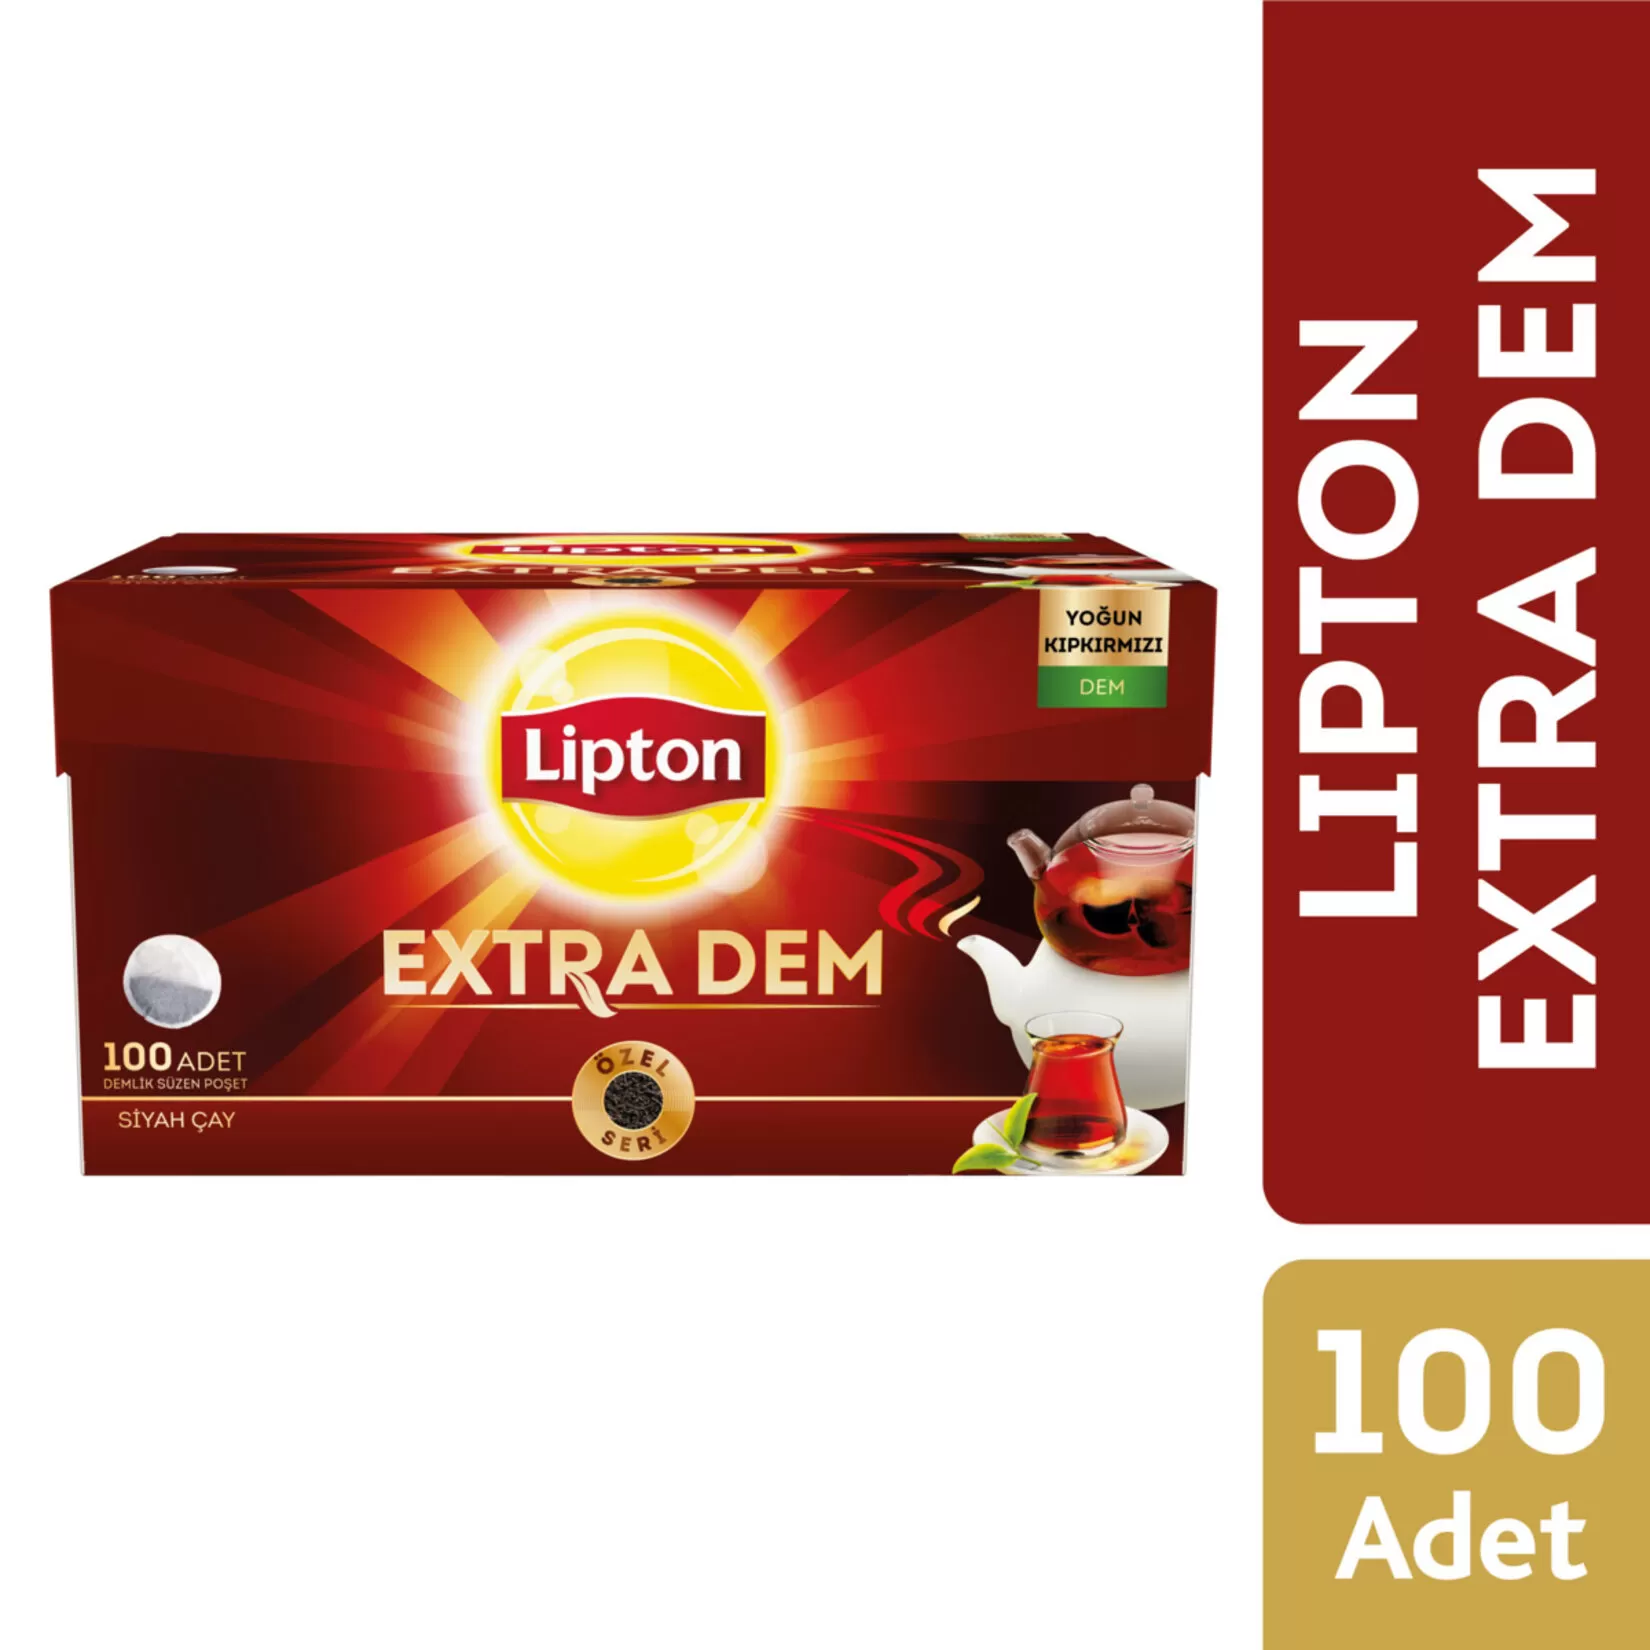 Lipton Extra Dem Demlik Poşet Siyah Çay 100'lü 8 Paket